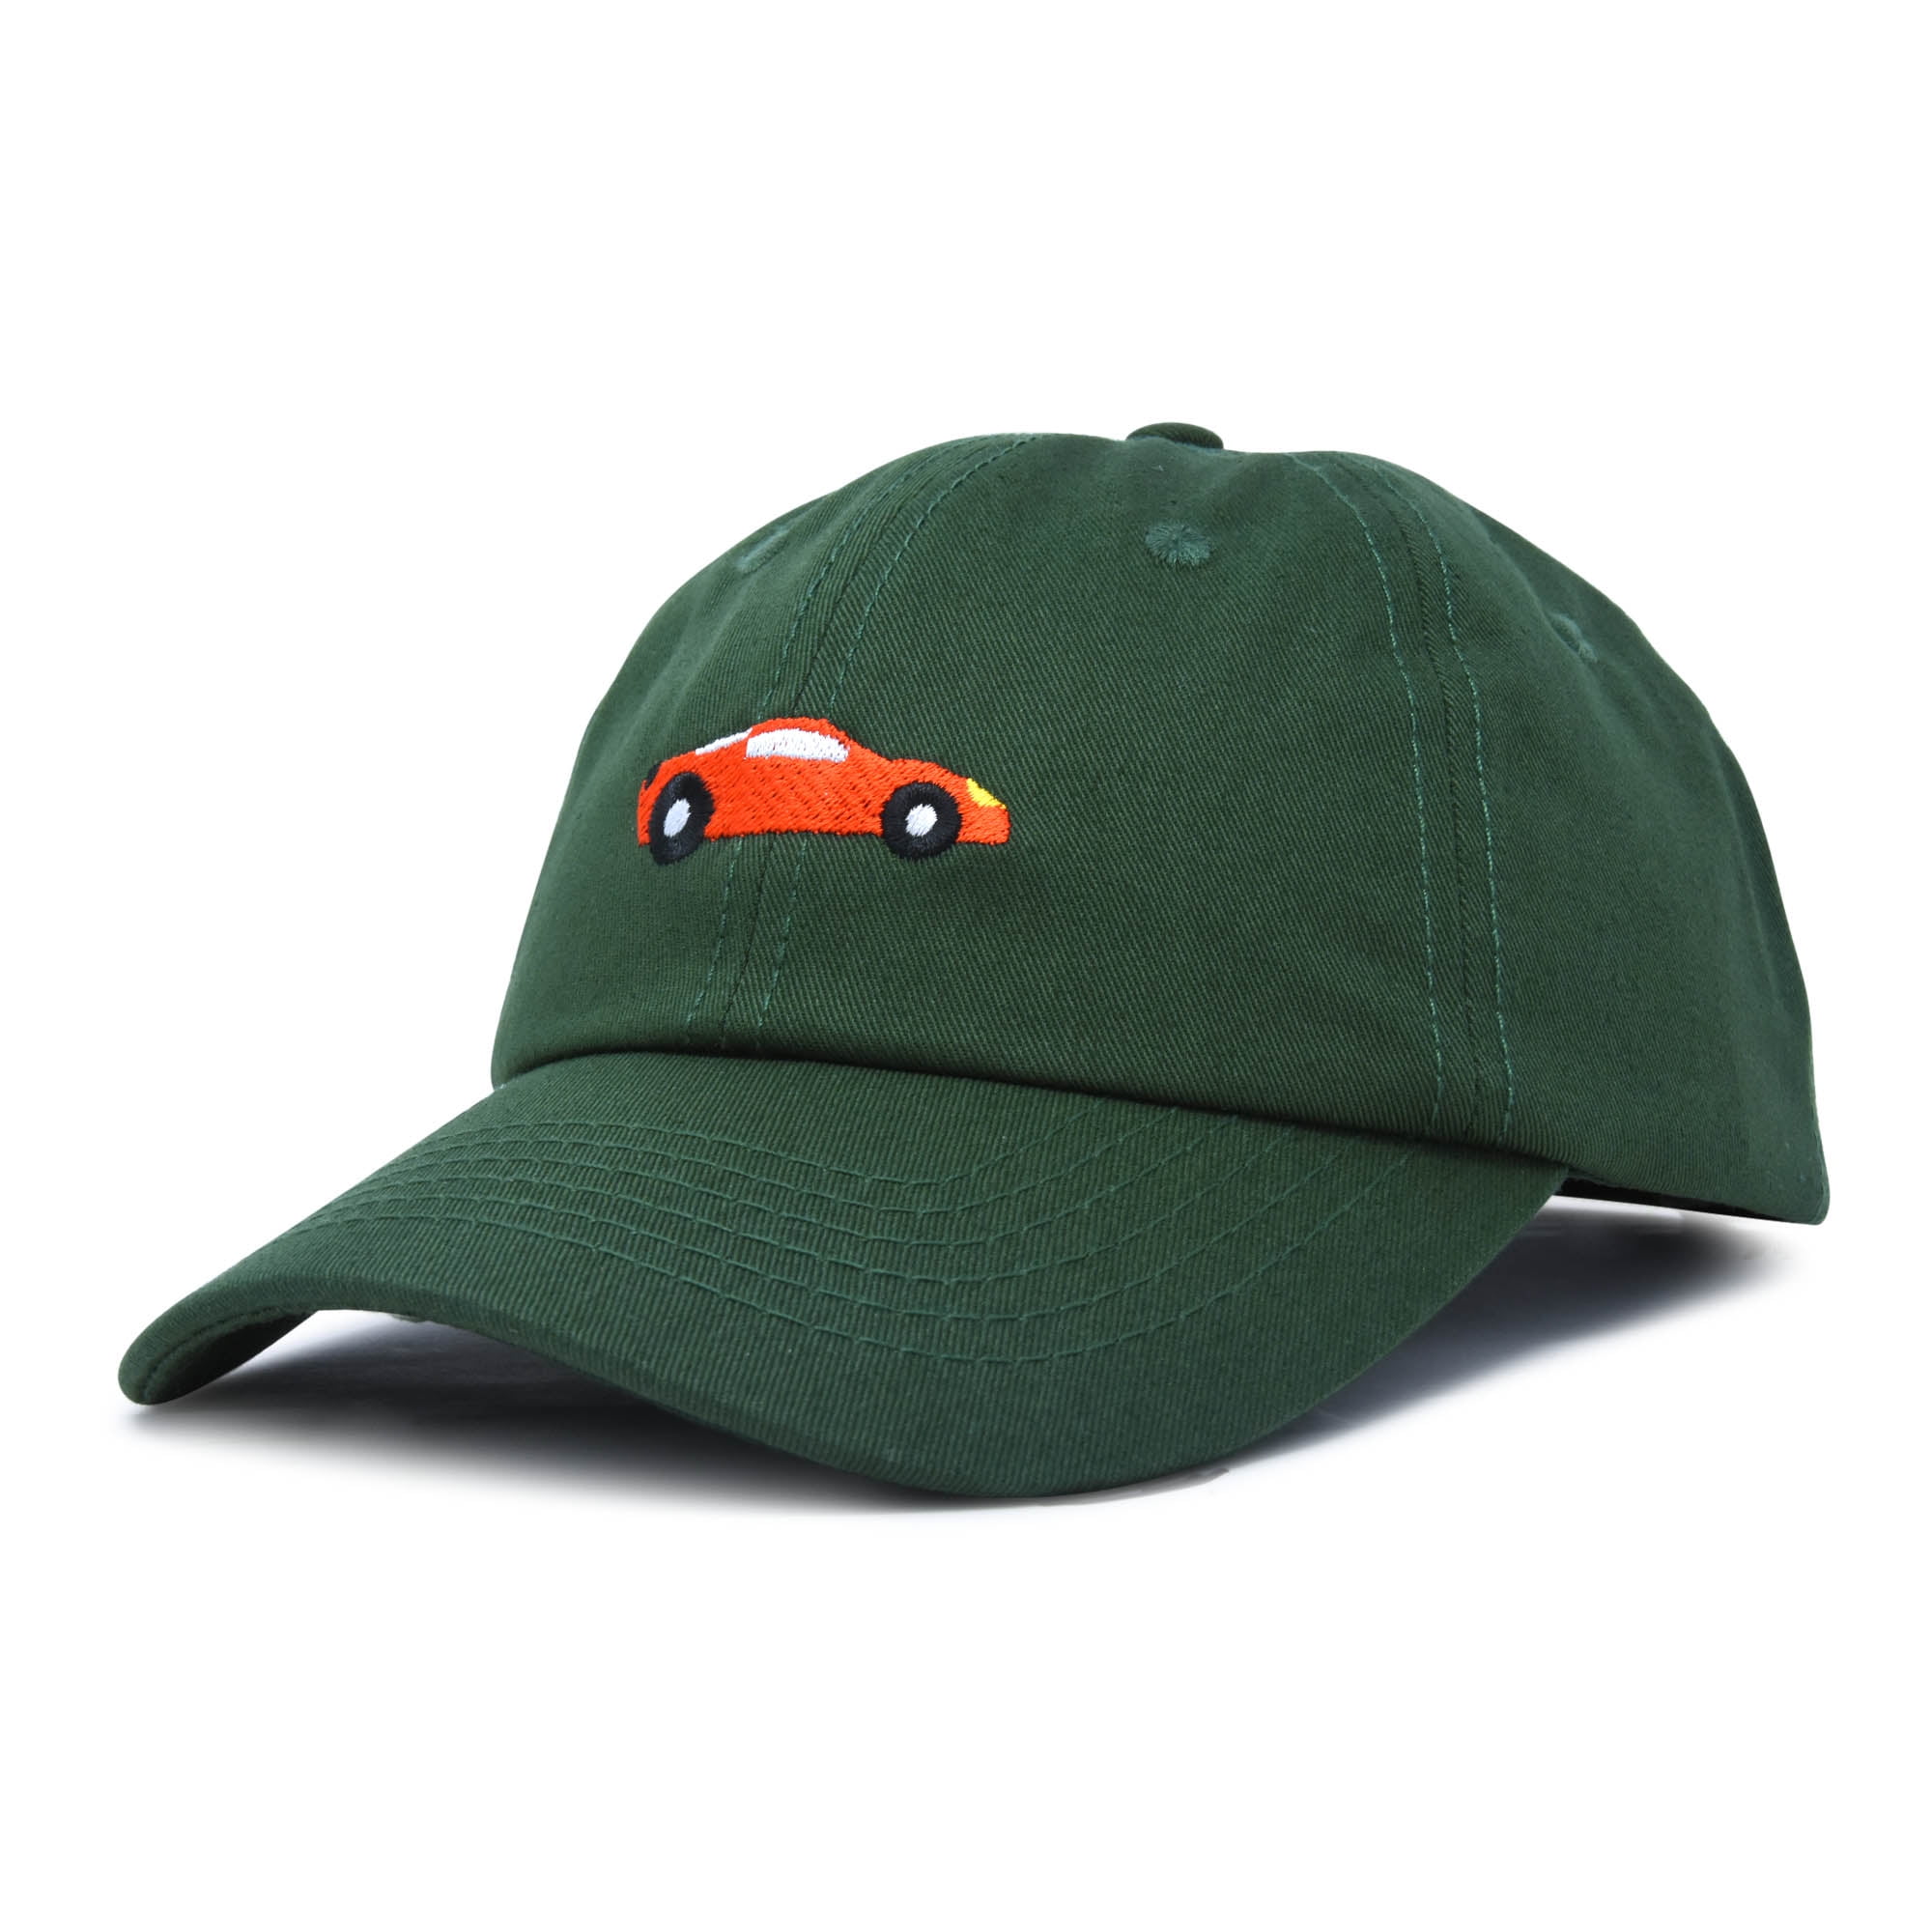 Custom Soft Baseball Cap Green Turtle Embroidery Dad Hats for Men & Women